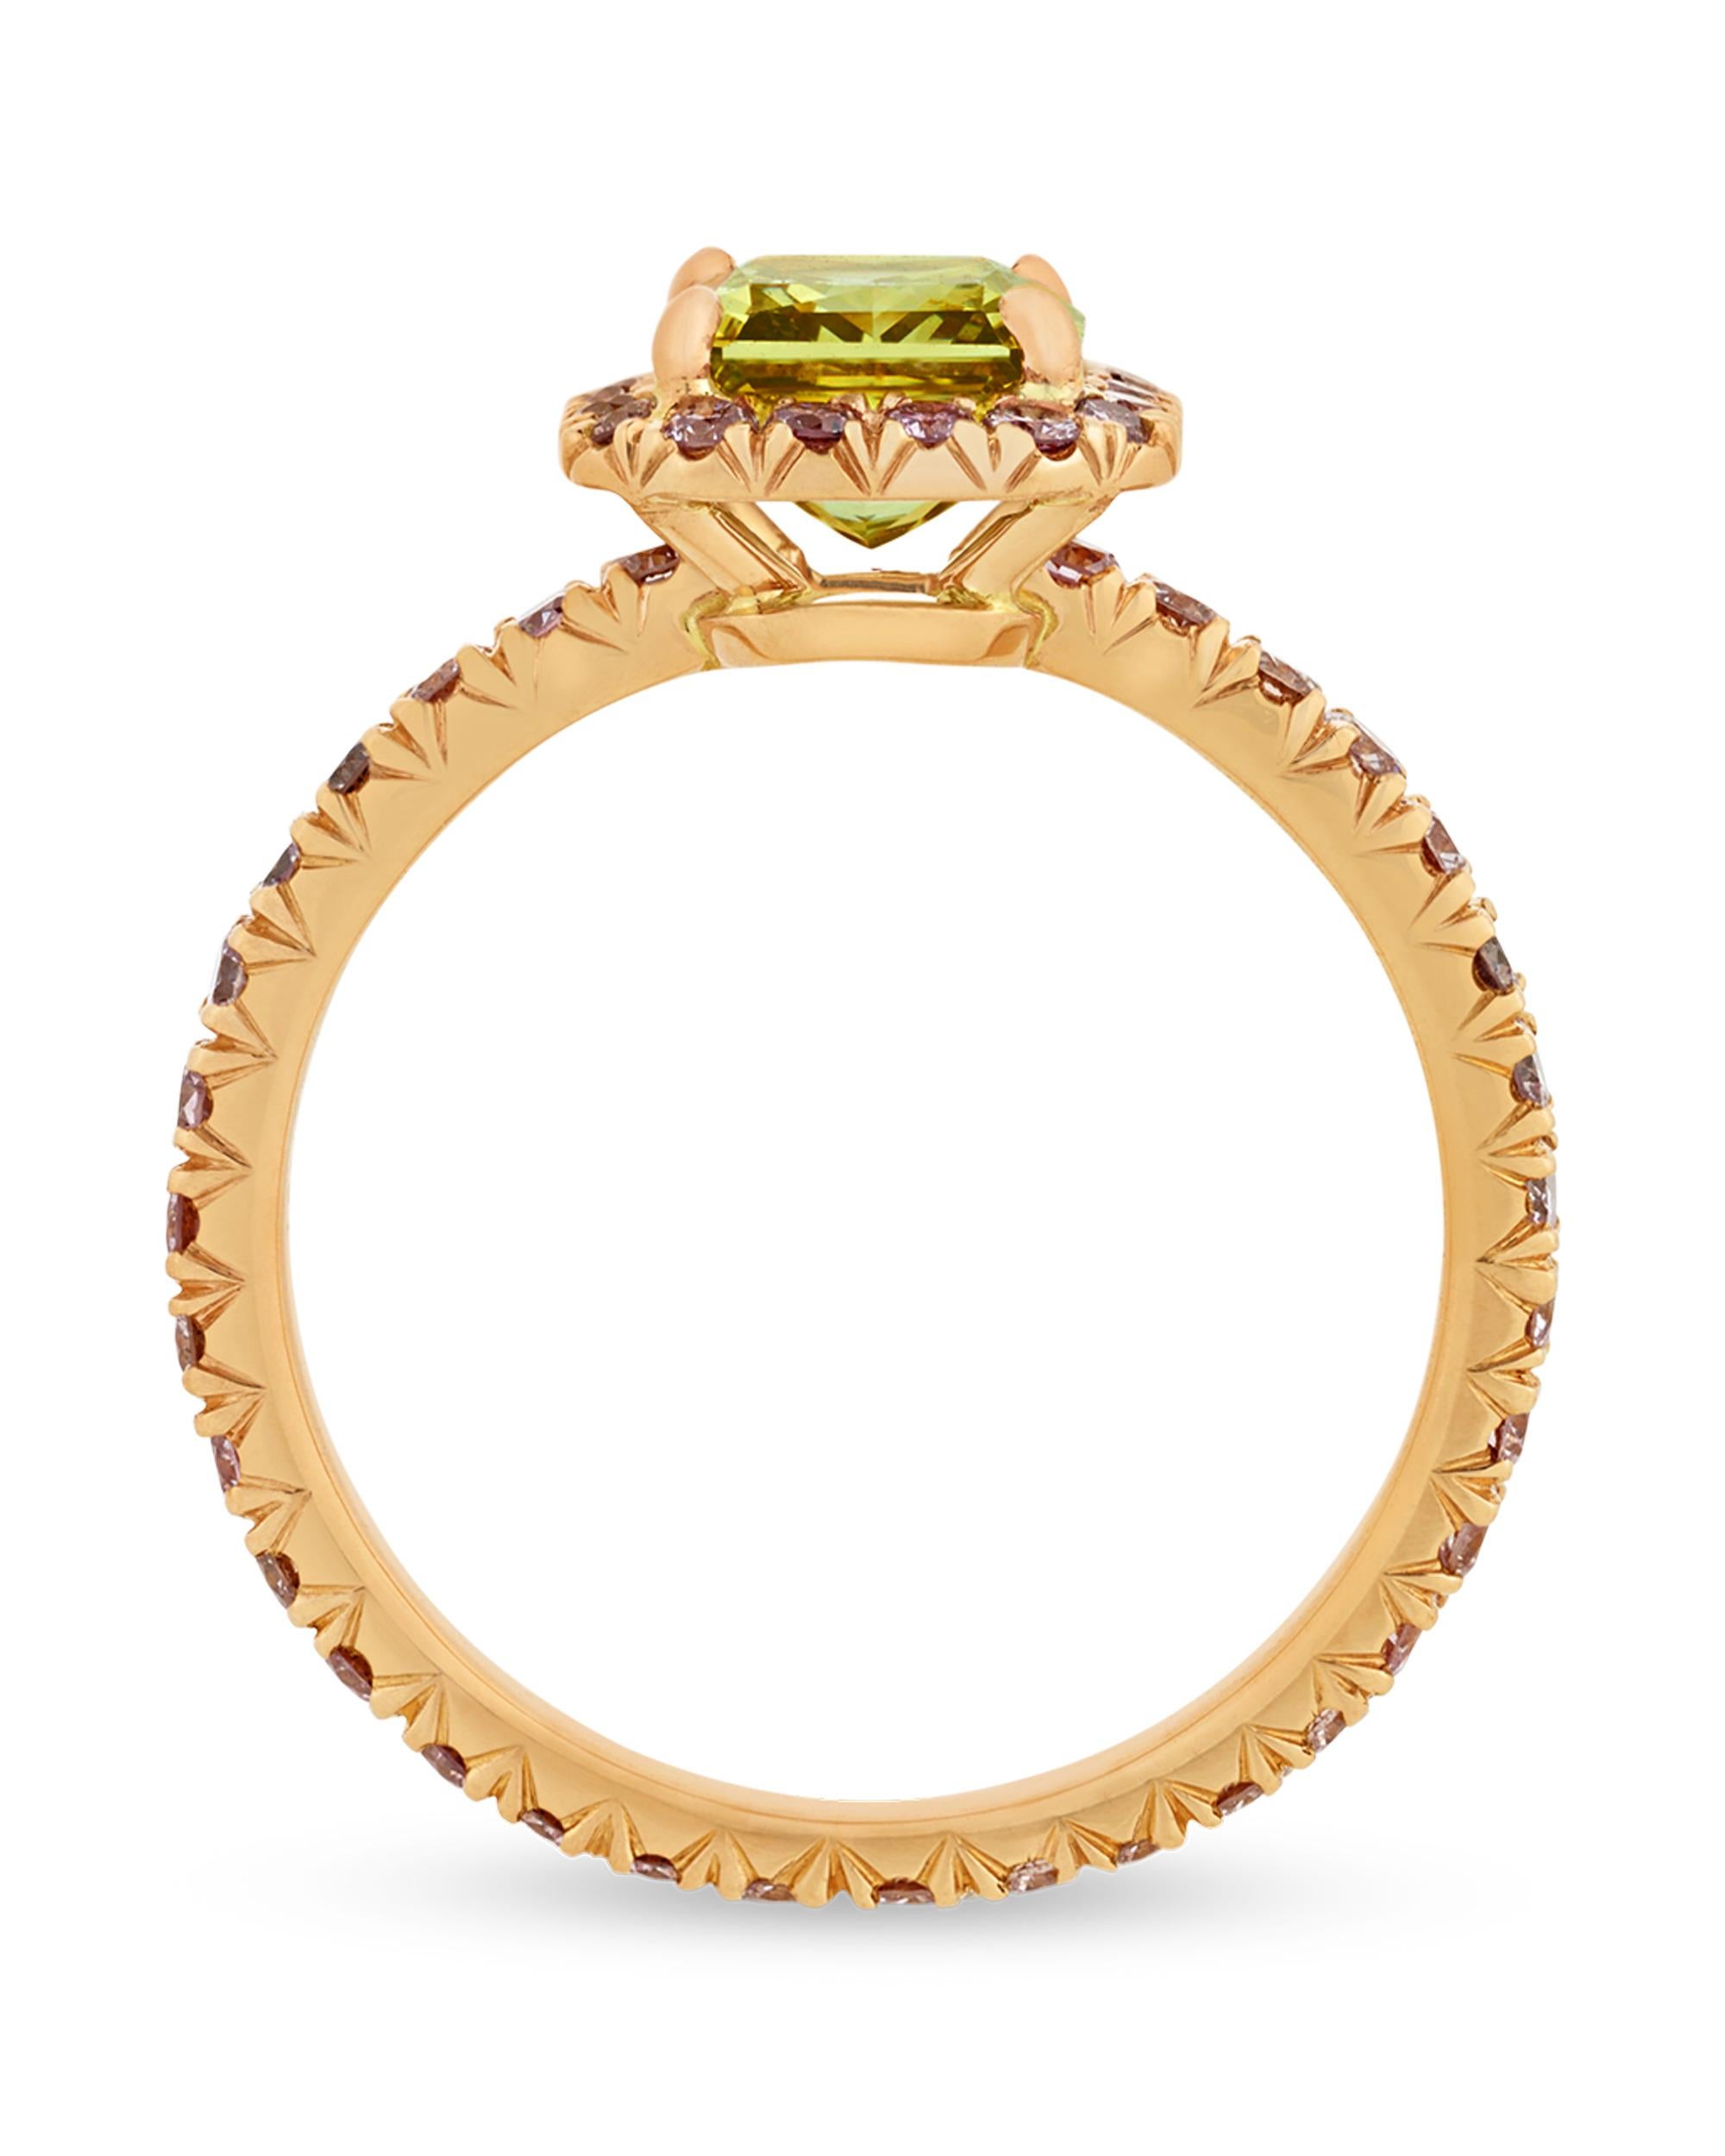 Modern Chameleon Diamond Ring, 1.29 Carats For Sale